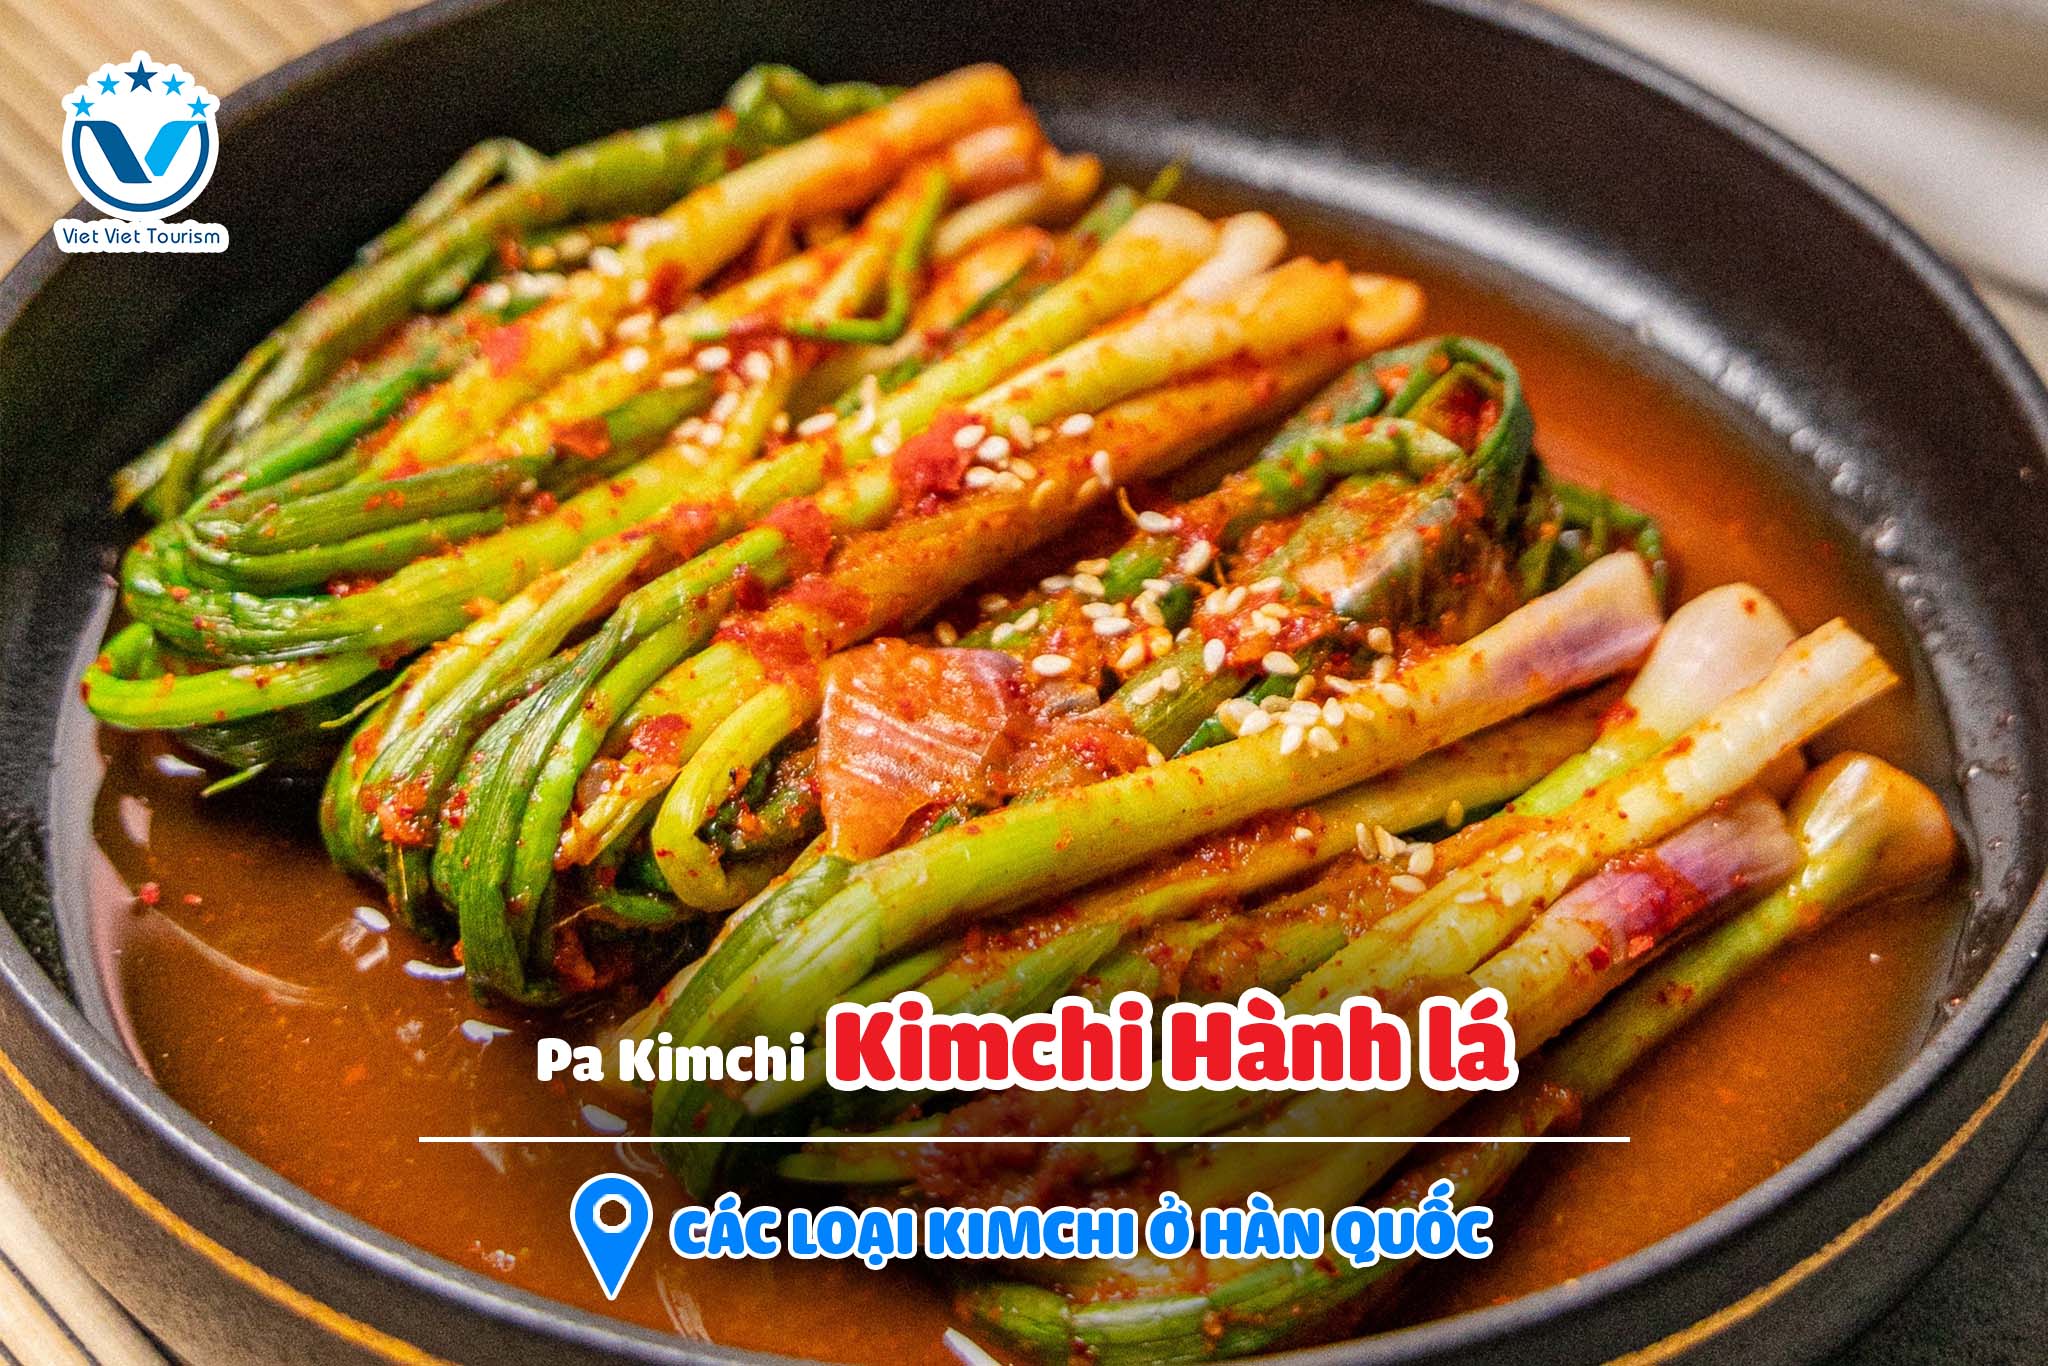 Kimchi VVT 7. Pa Kimchi